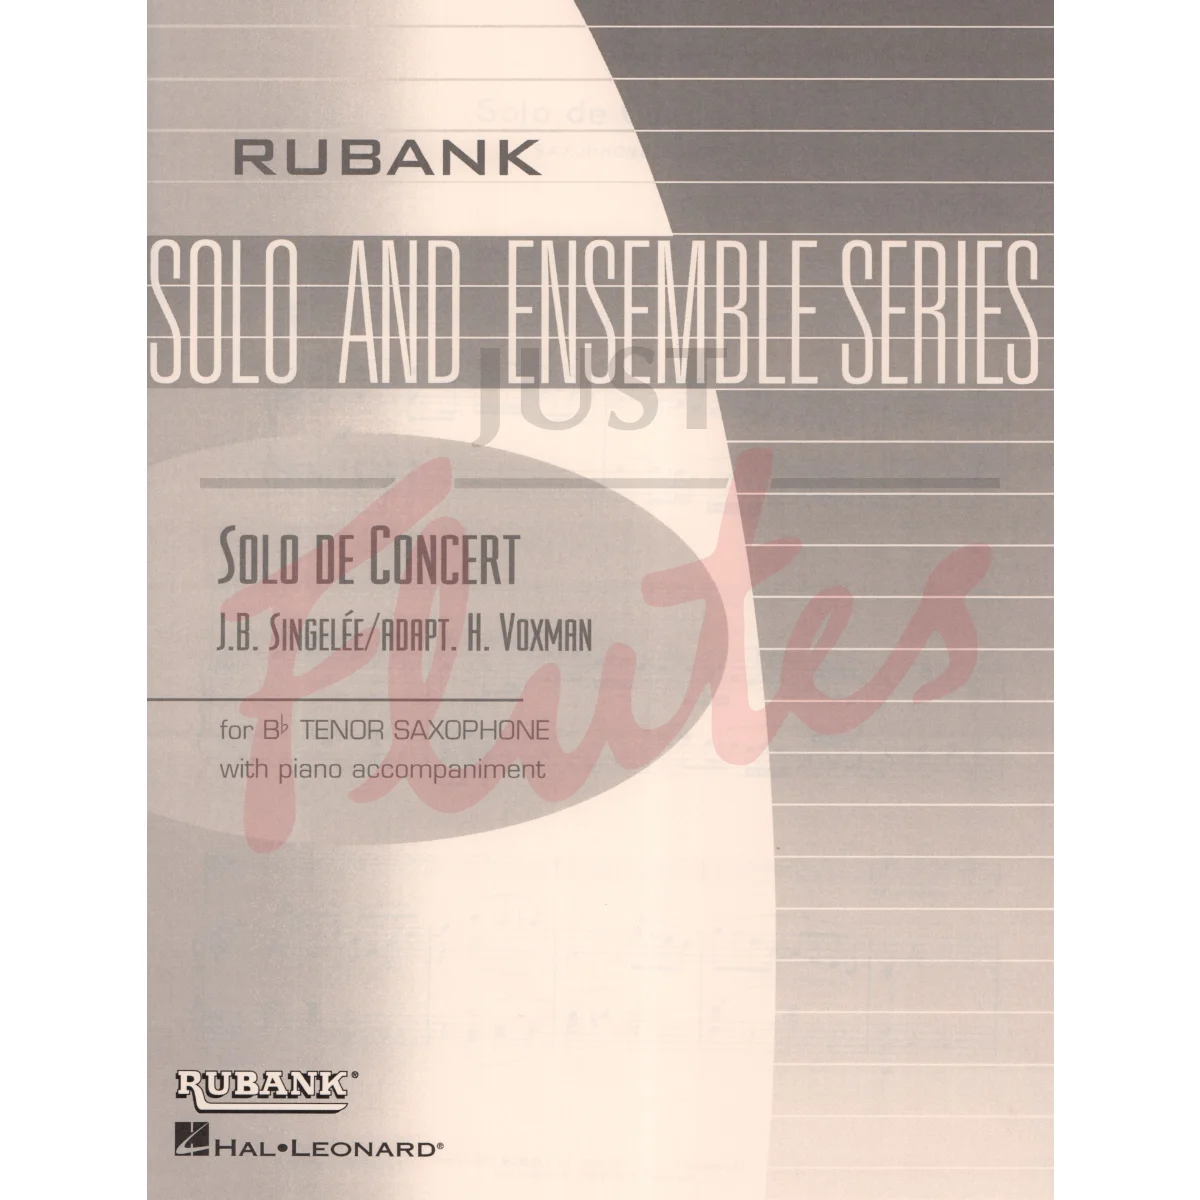 Solo de Concert for Tenor Saxophone and Piano